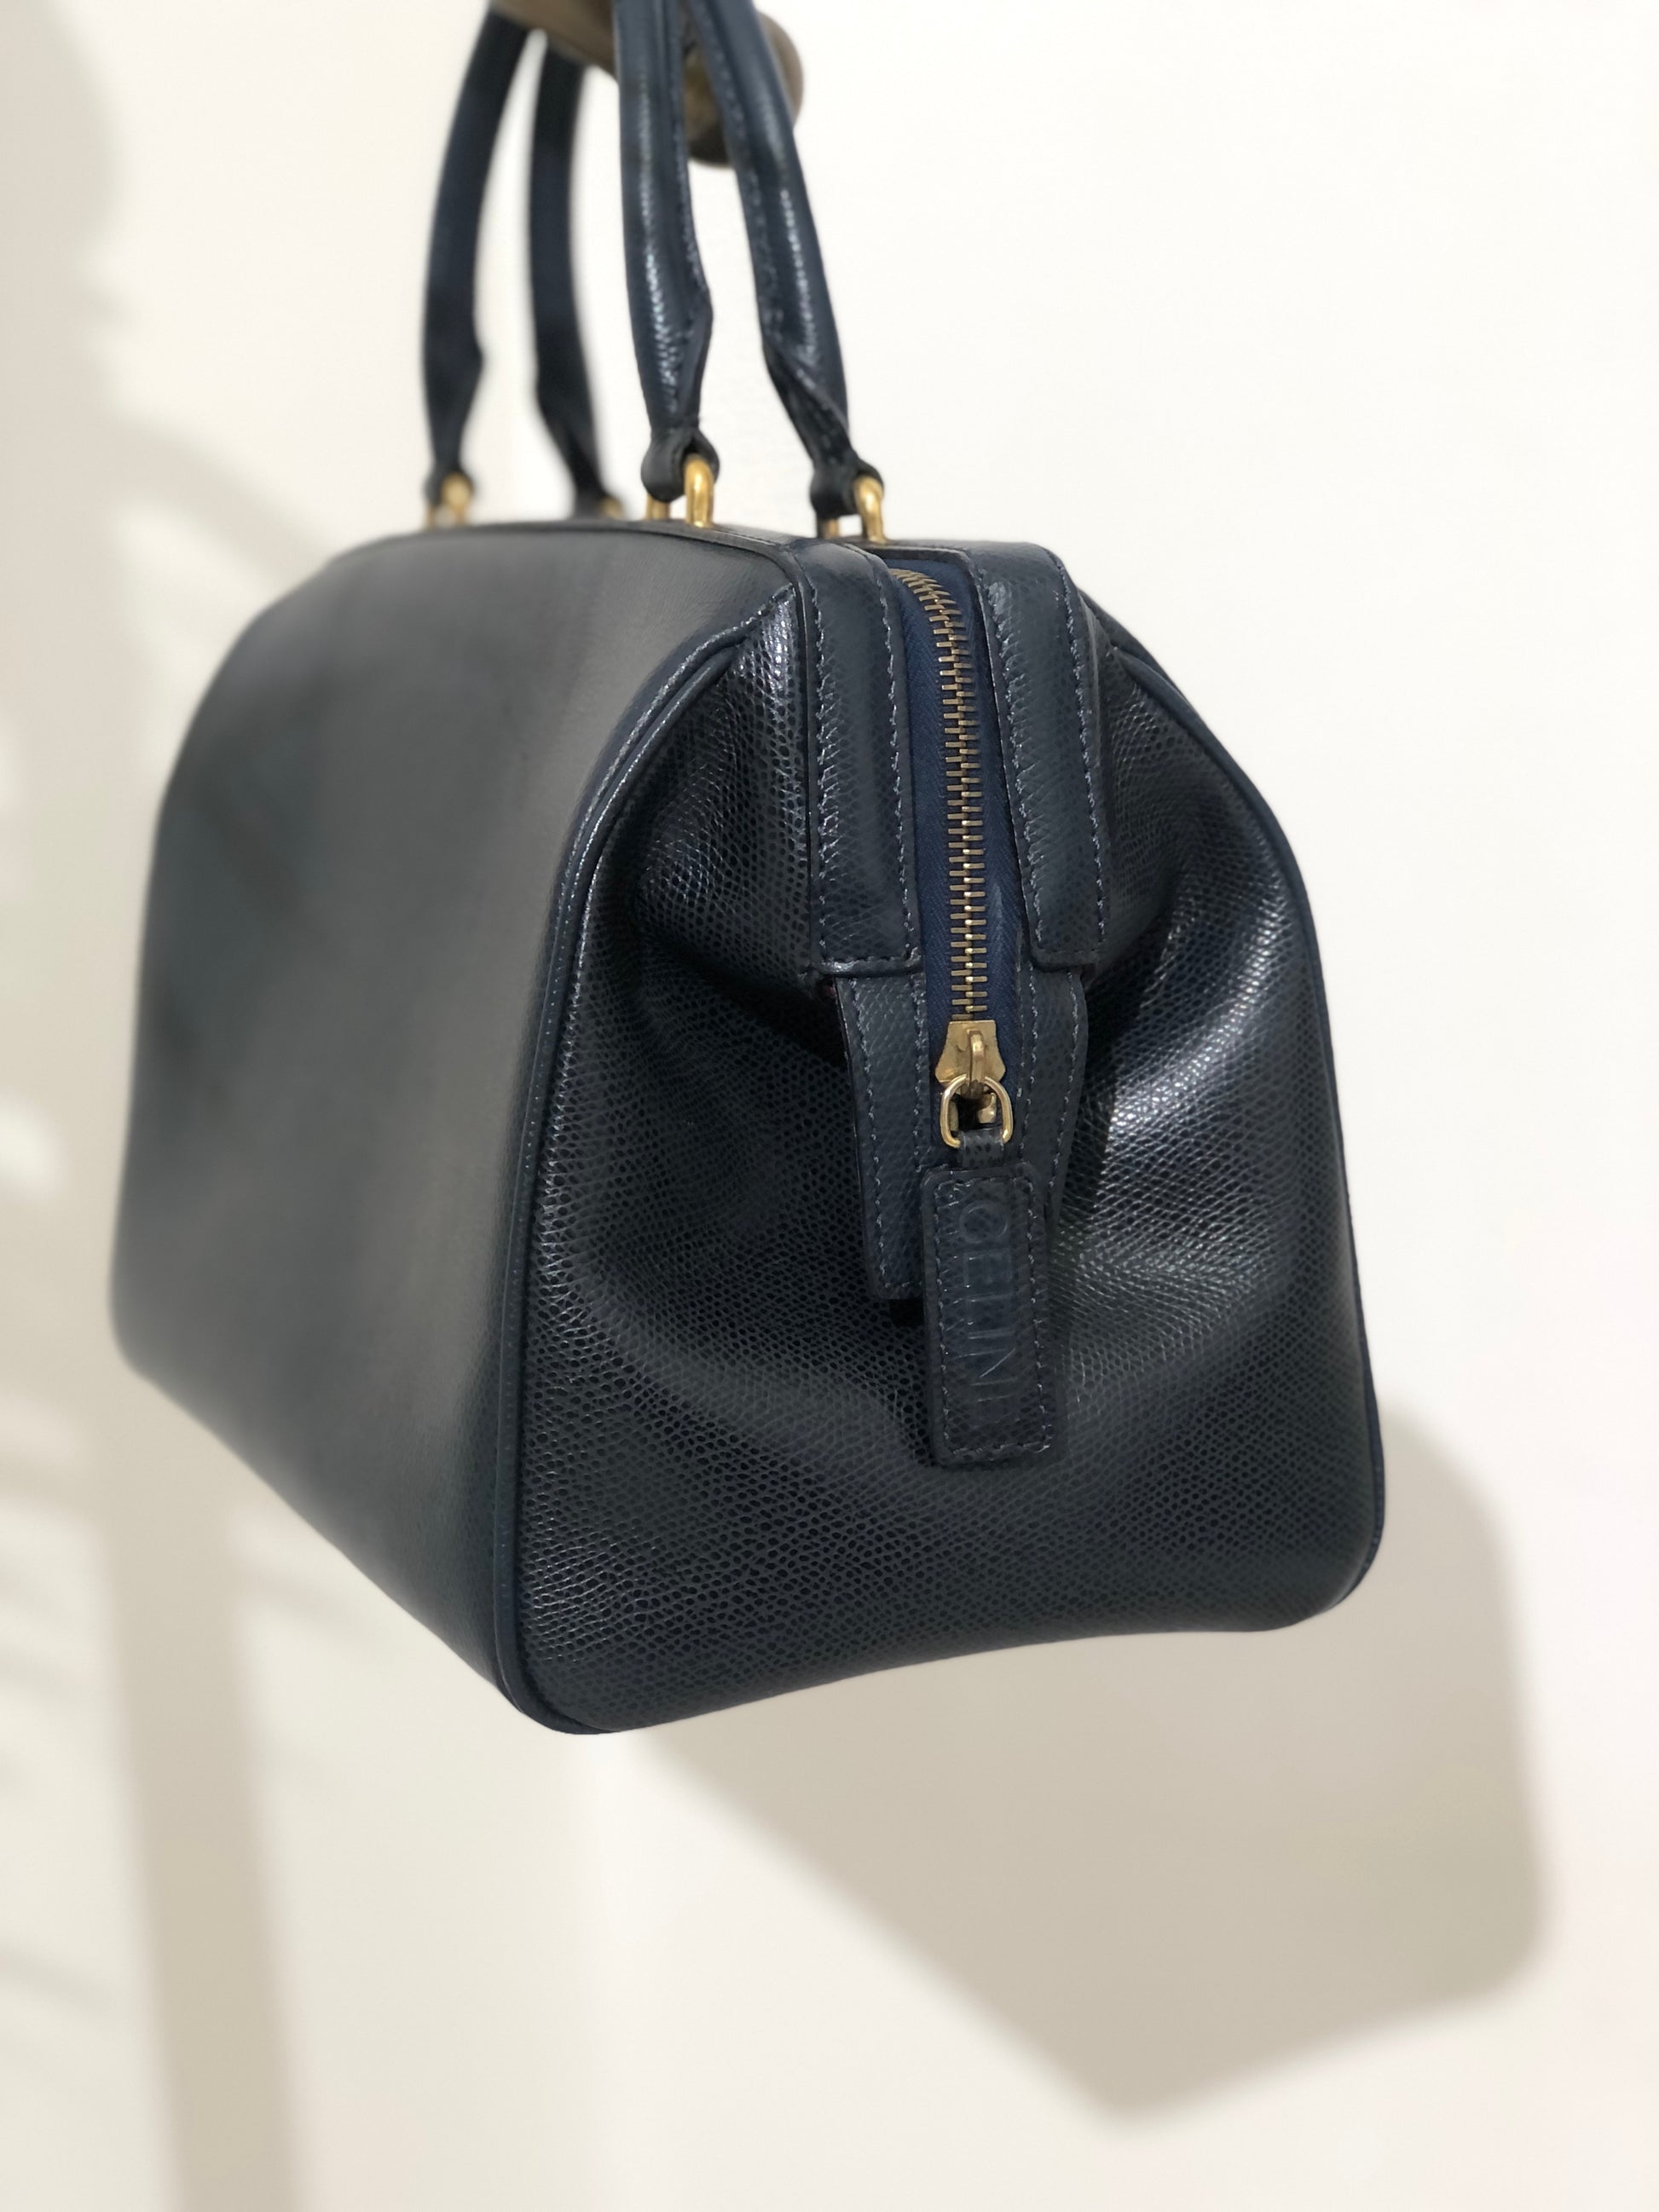 SALE ! Gucci vintage navy blue boston bag doctor bag satchel purse